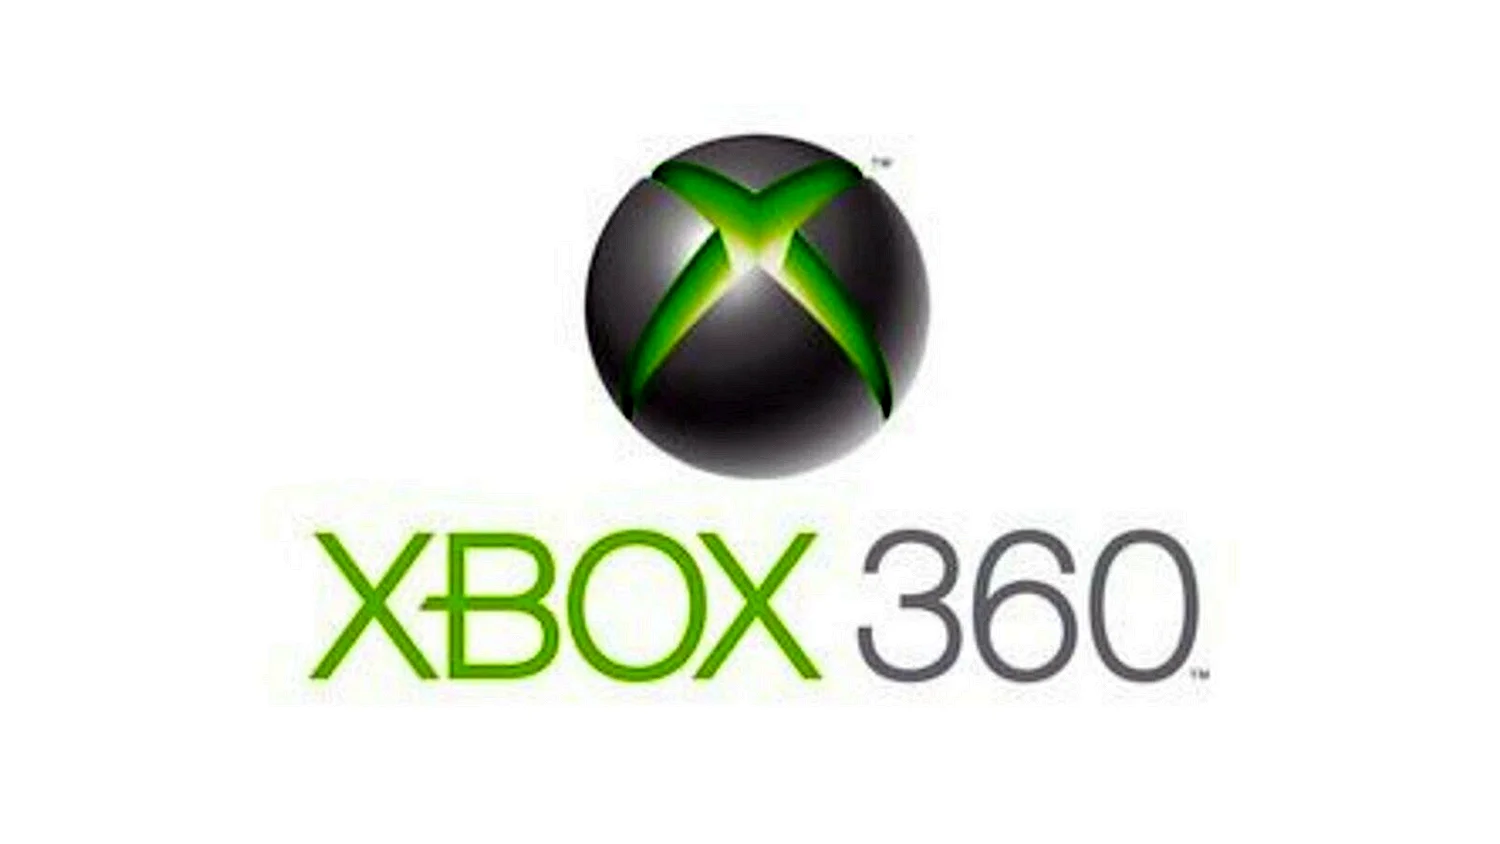 Xbox 360 logo